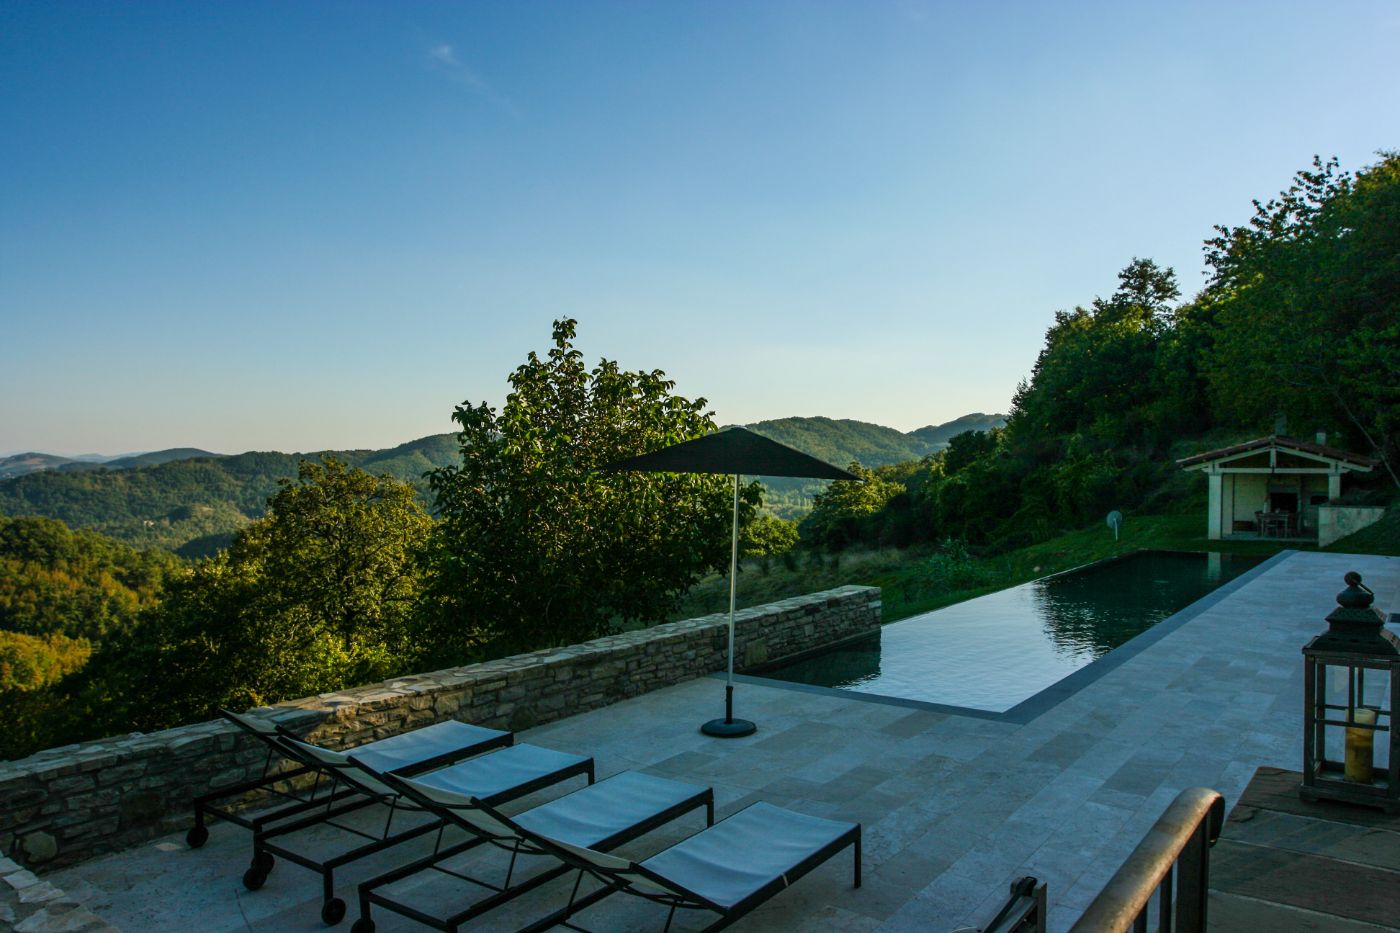 The views of rolling hills beyond the infinity pool at La Spighetta.